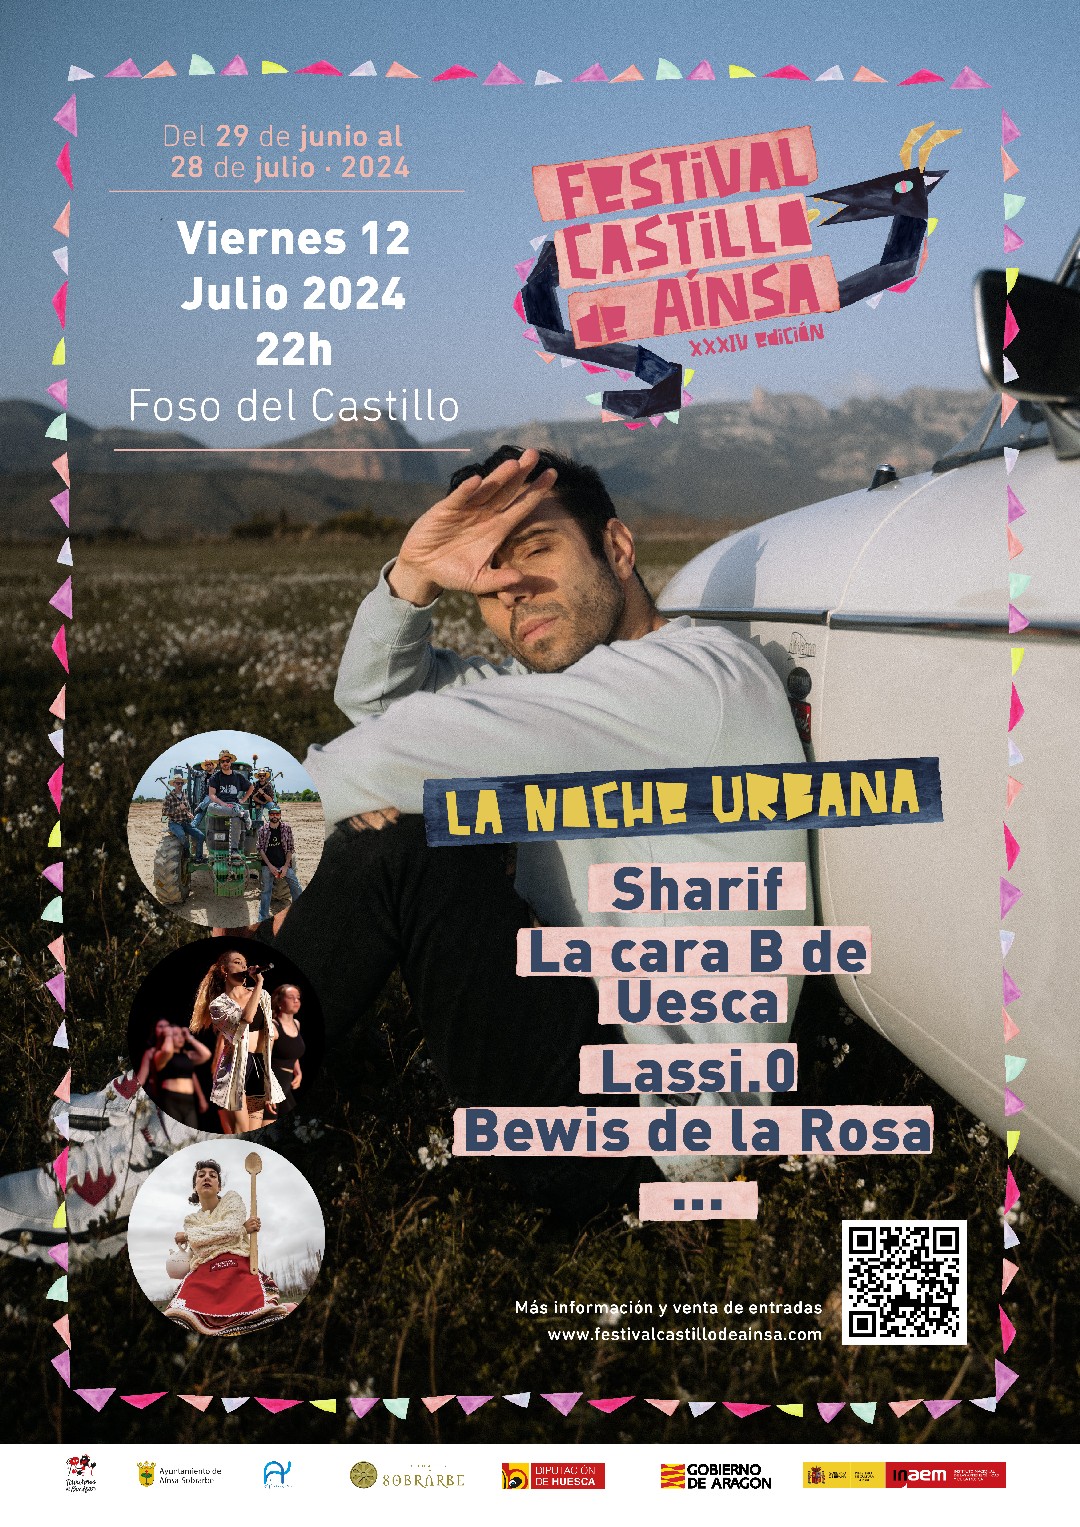 Concierto Noche Urbana - Sharif Bewis de la Rosa - La cara B de Uesca - Lassi.0 - 